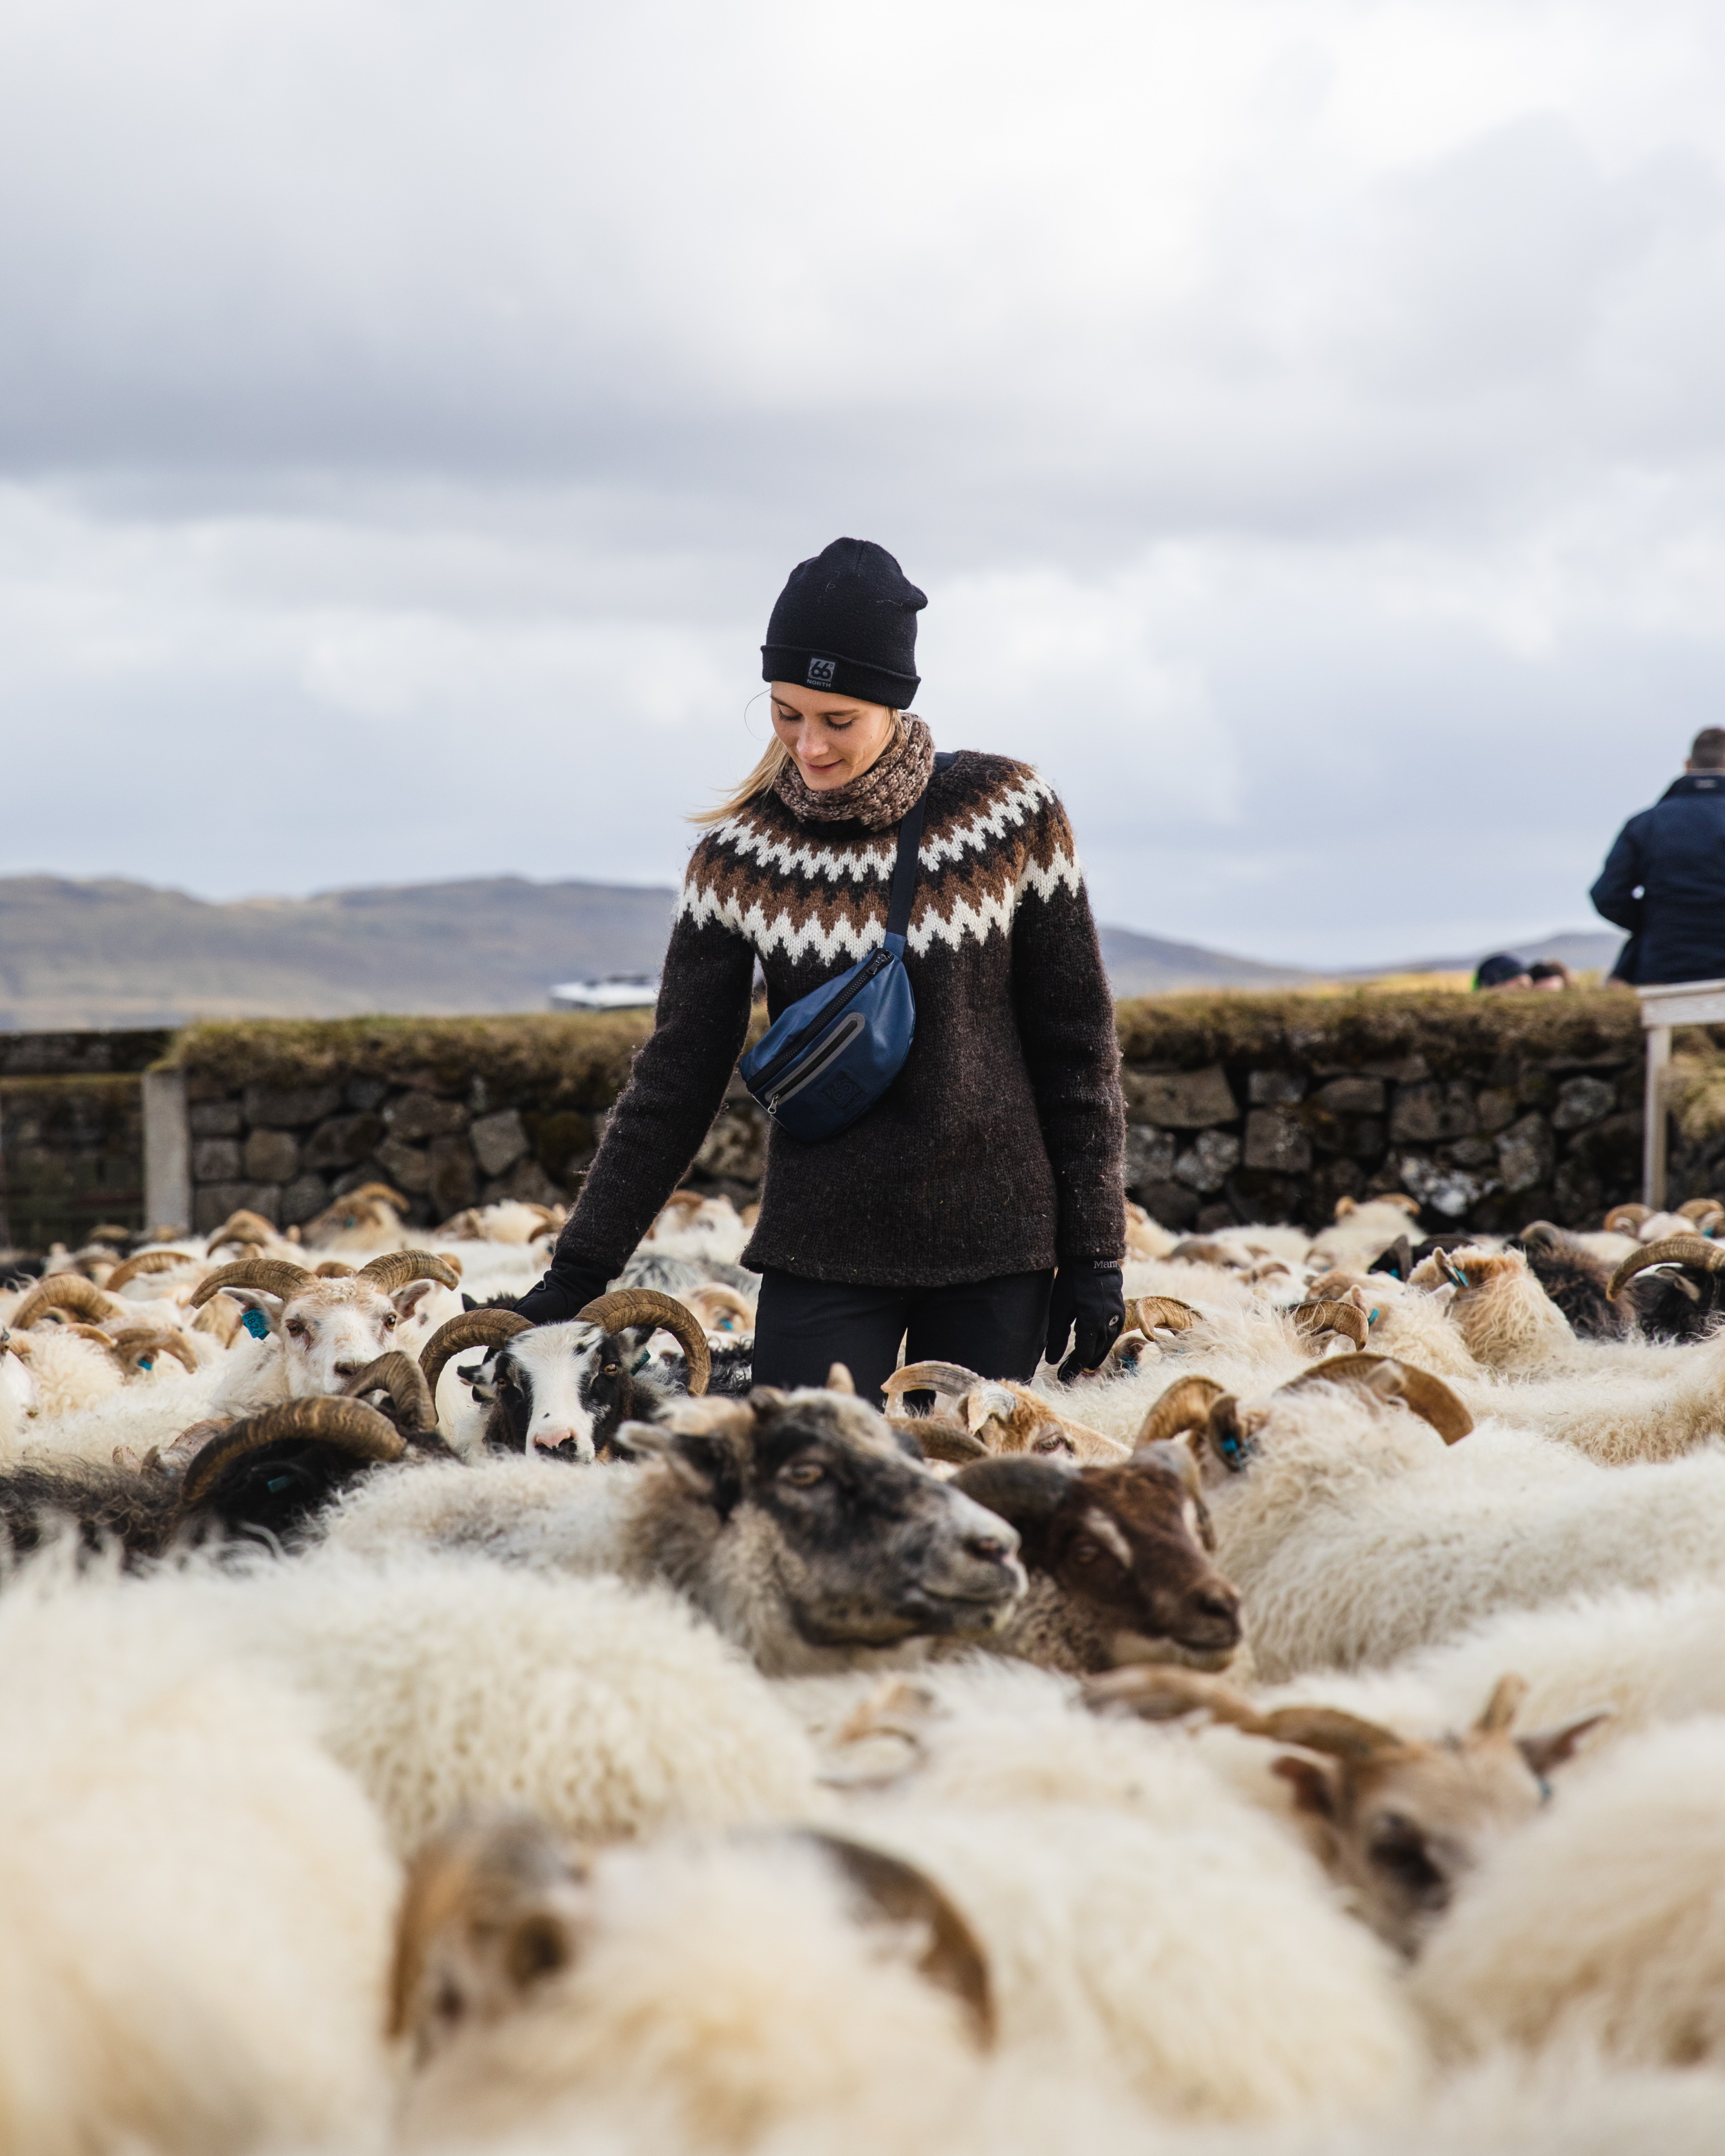 A woman herding sheep